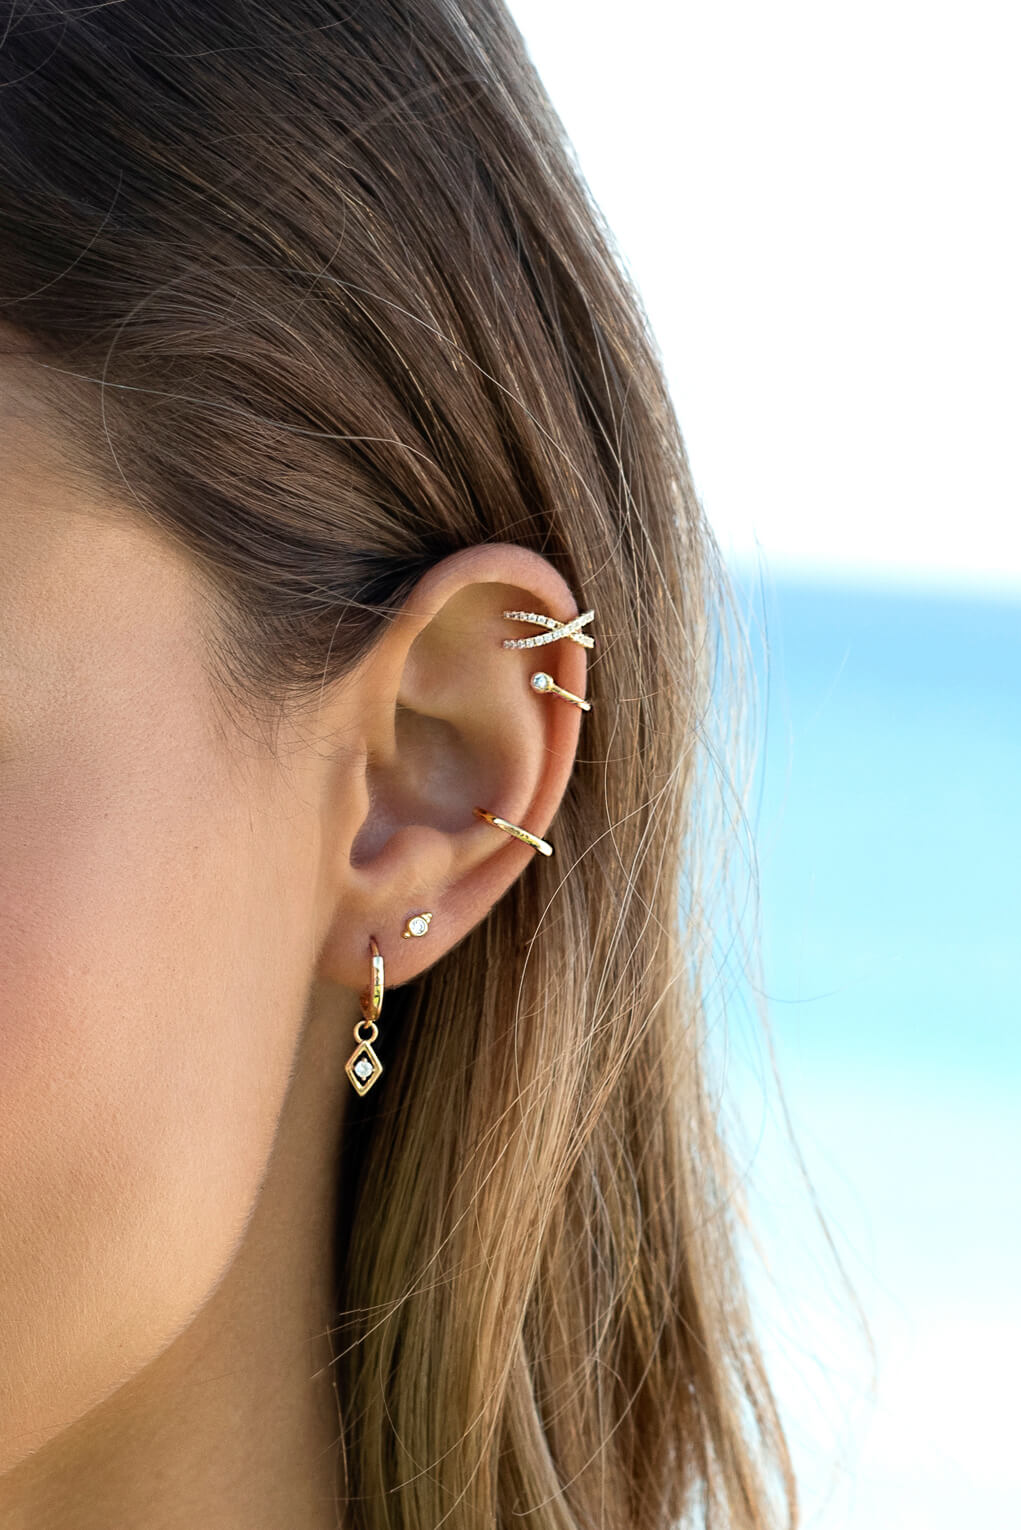 swell earring